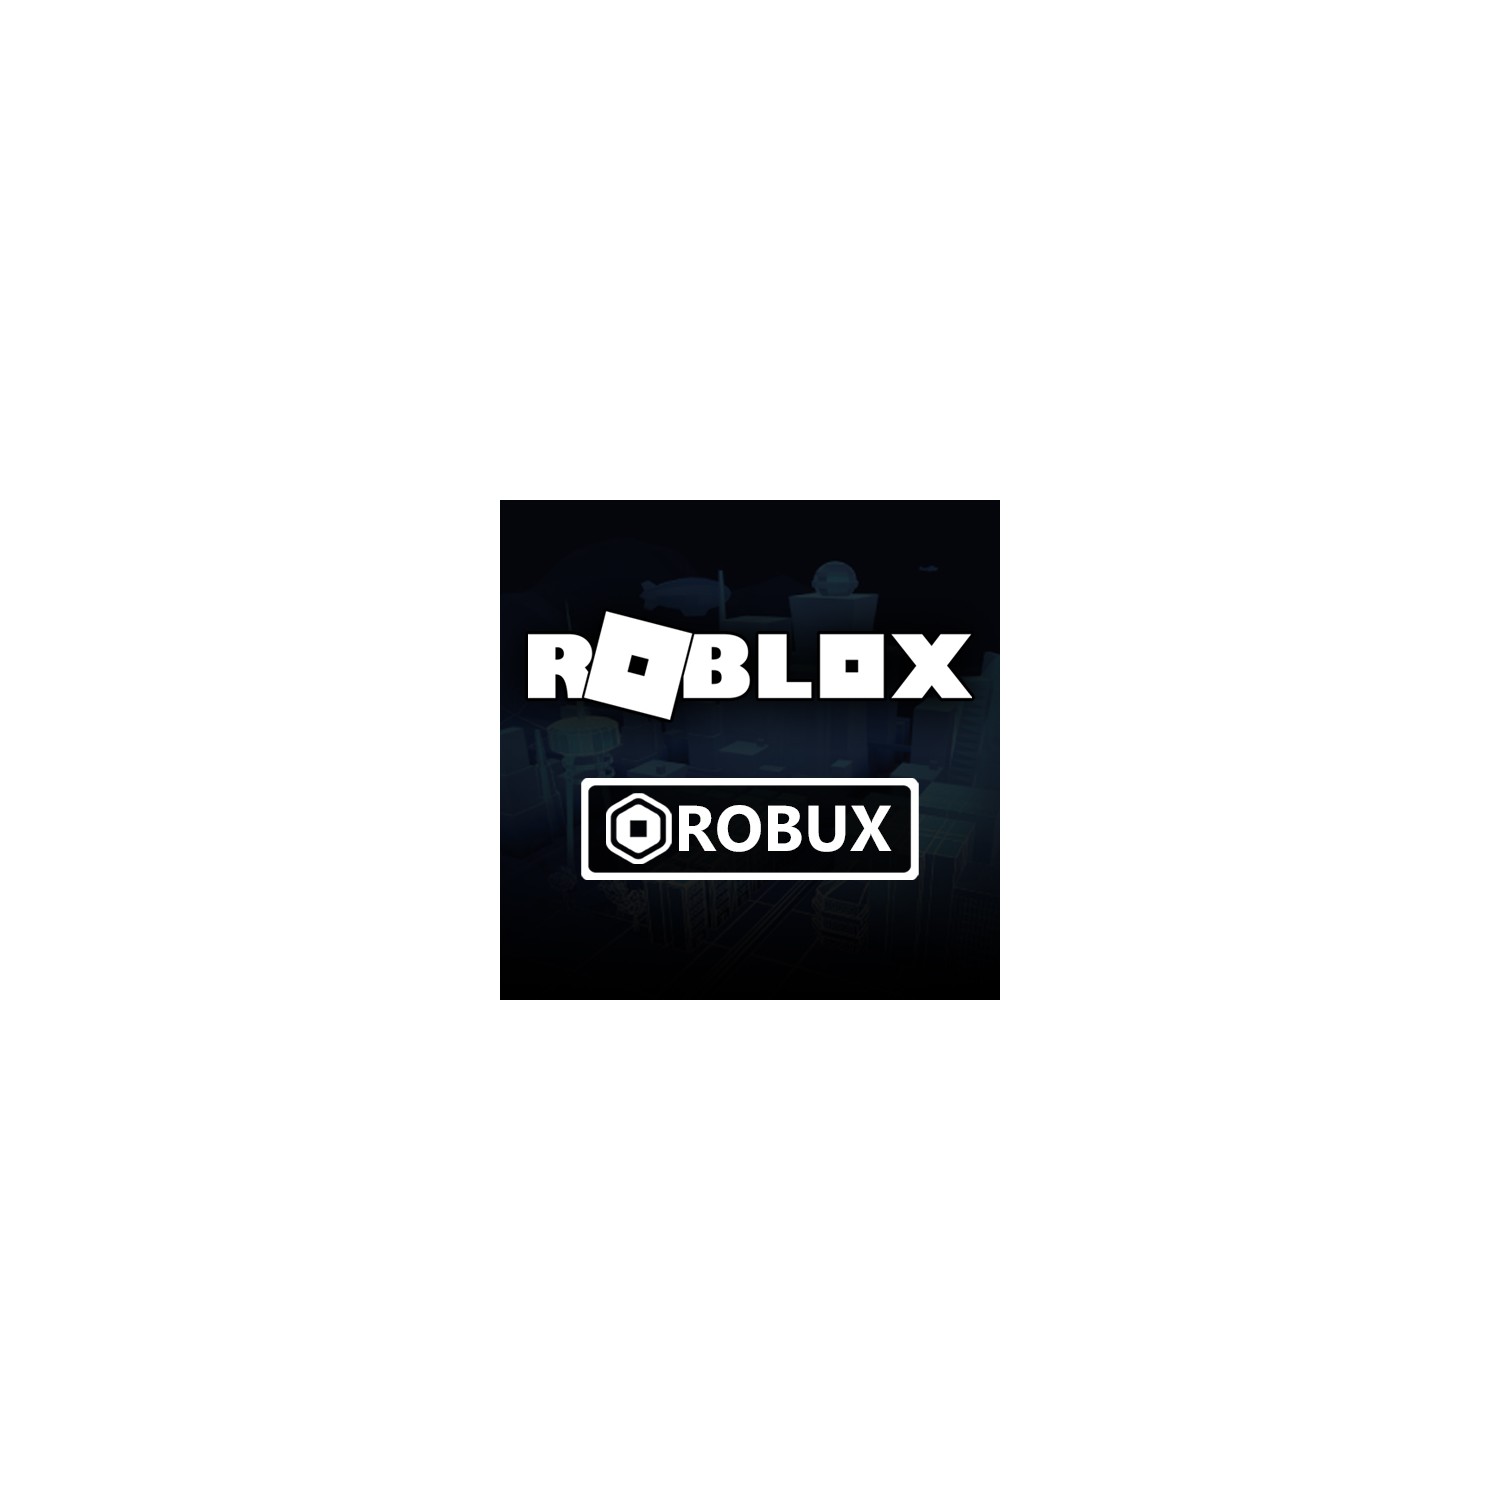 Roblox 800 Robux Fiyati Taksit Secenekleri Ile Satin Al - roblox ucuza robux alma